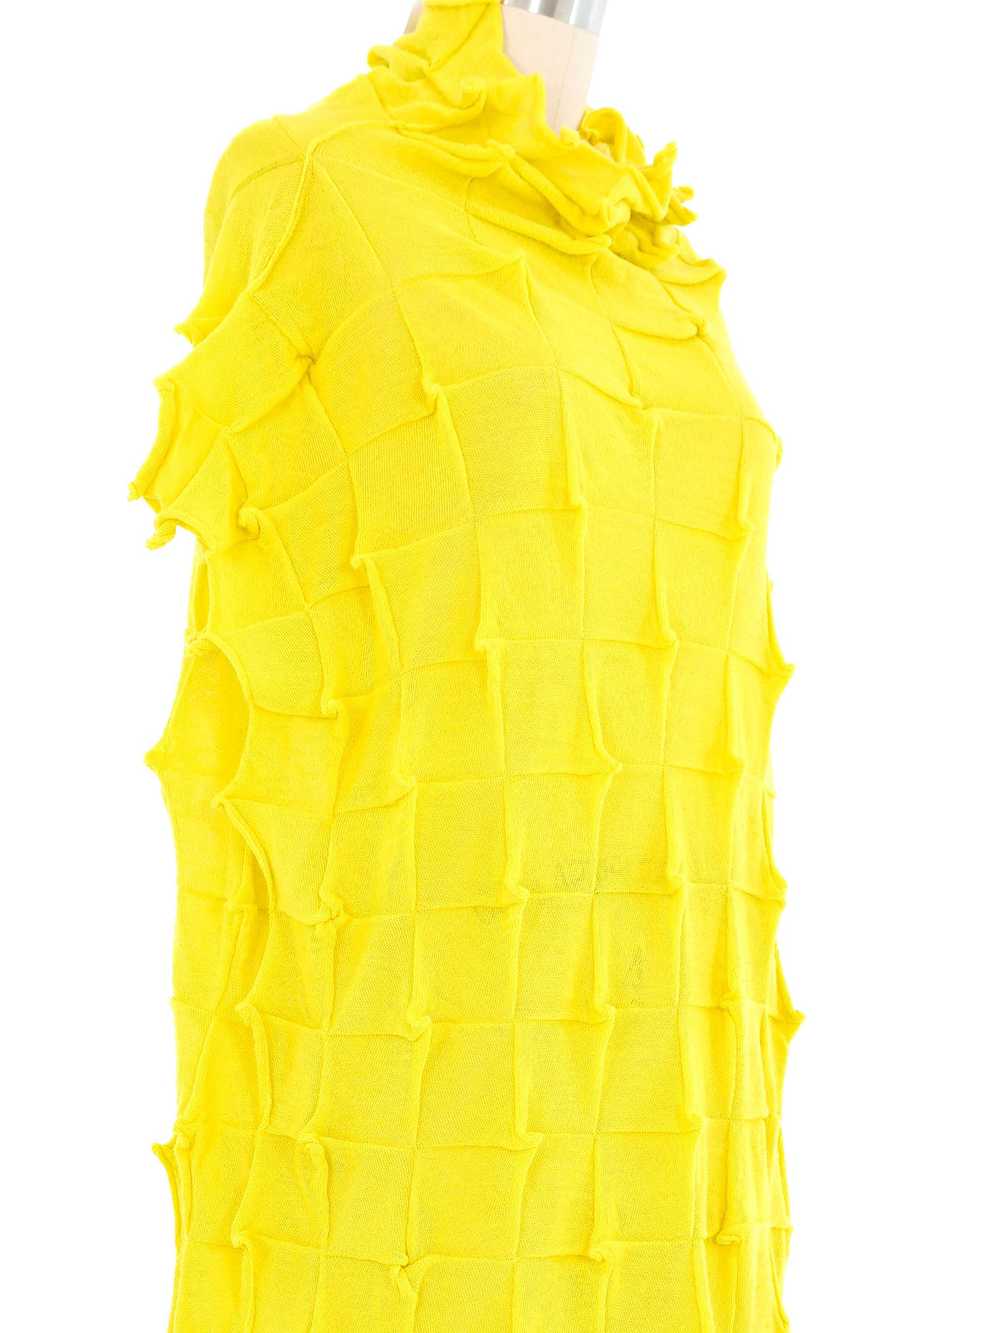 Issey Miyake Neon Textured Knit Dress - image 2